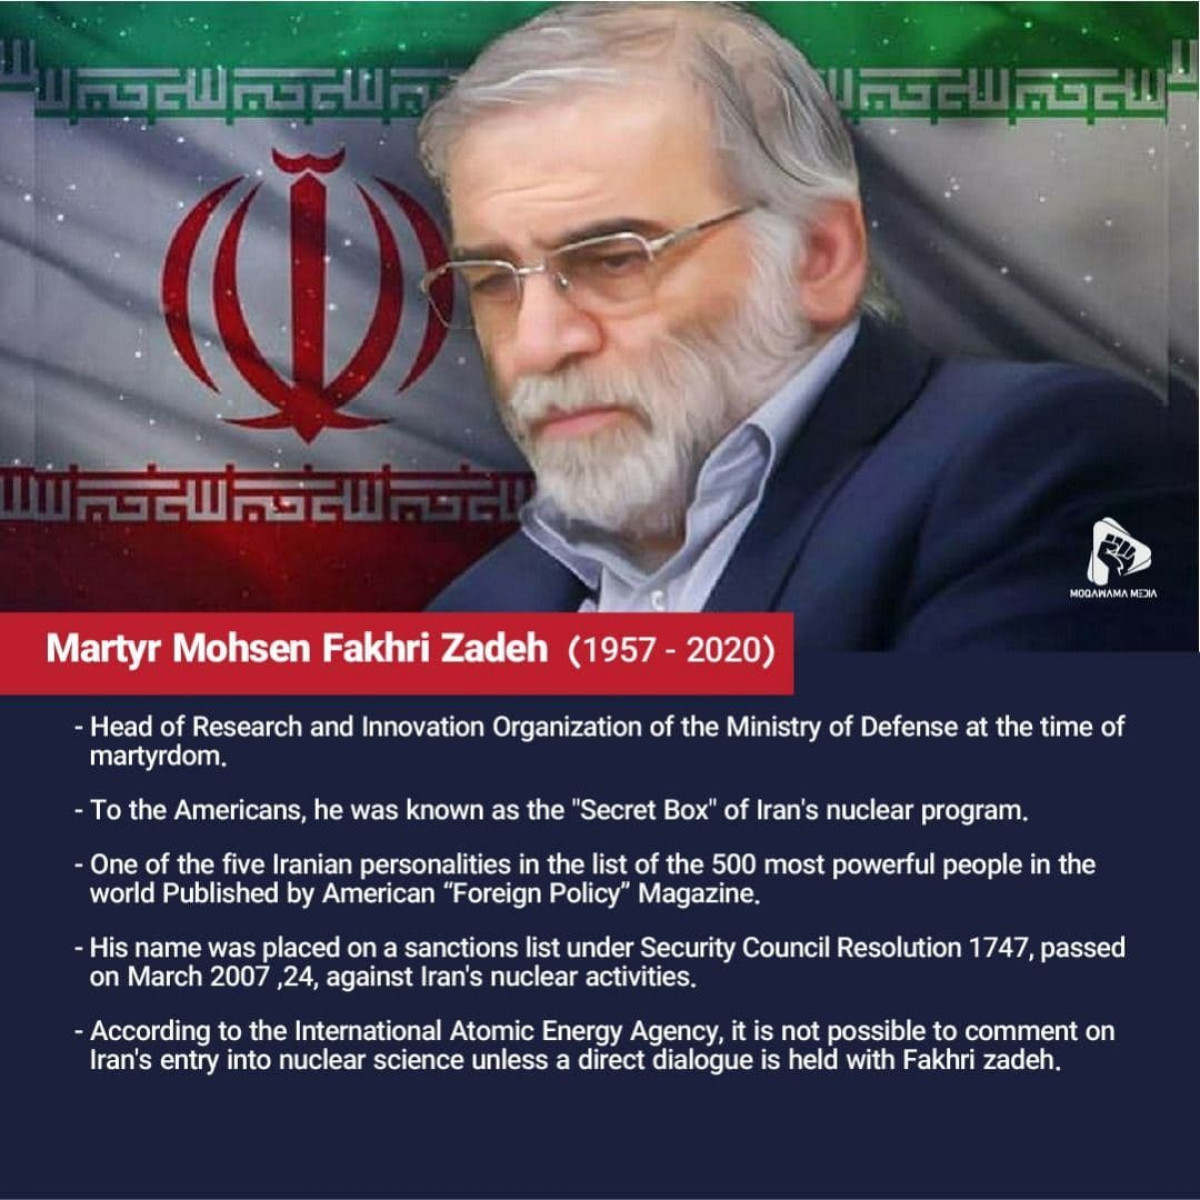 Martyr Mohsen Fakhri Zadeh 1957 - 2020